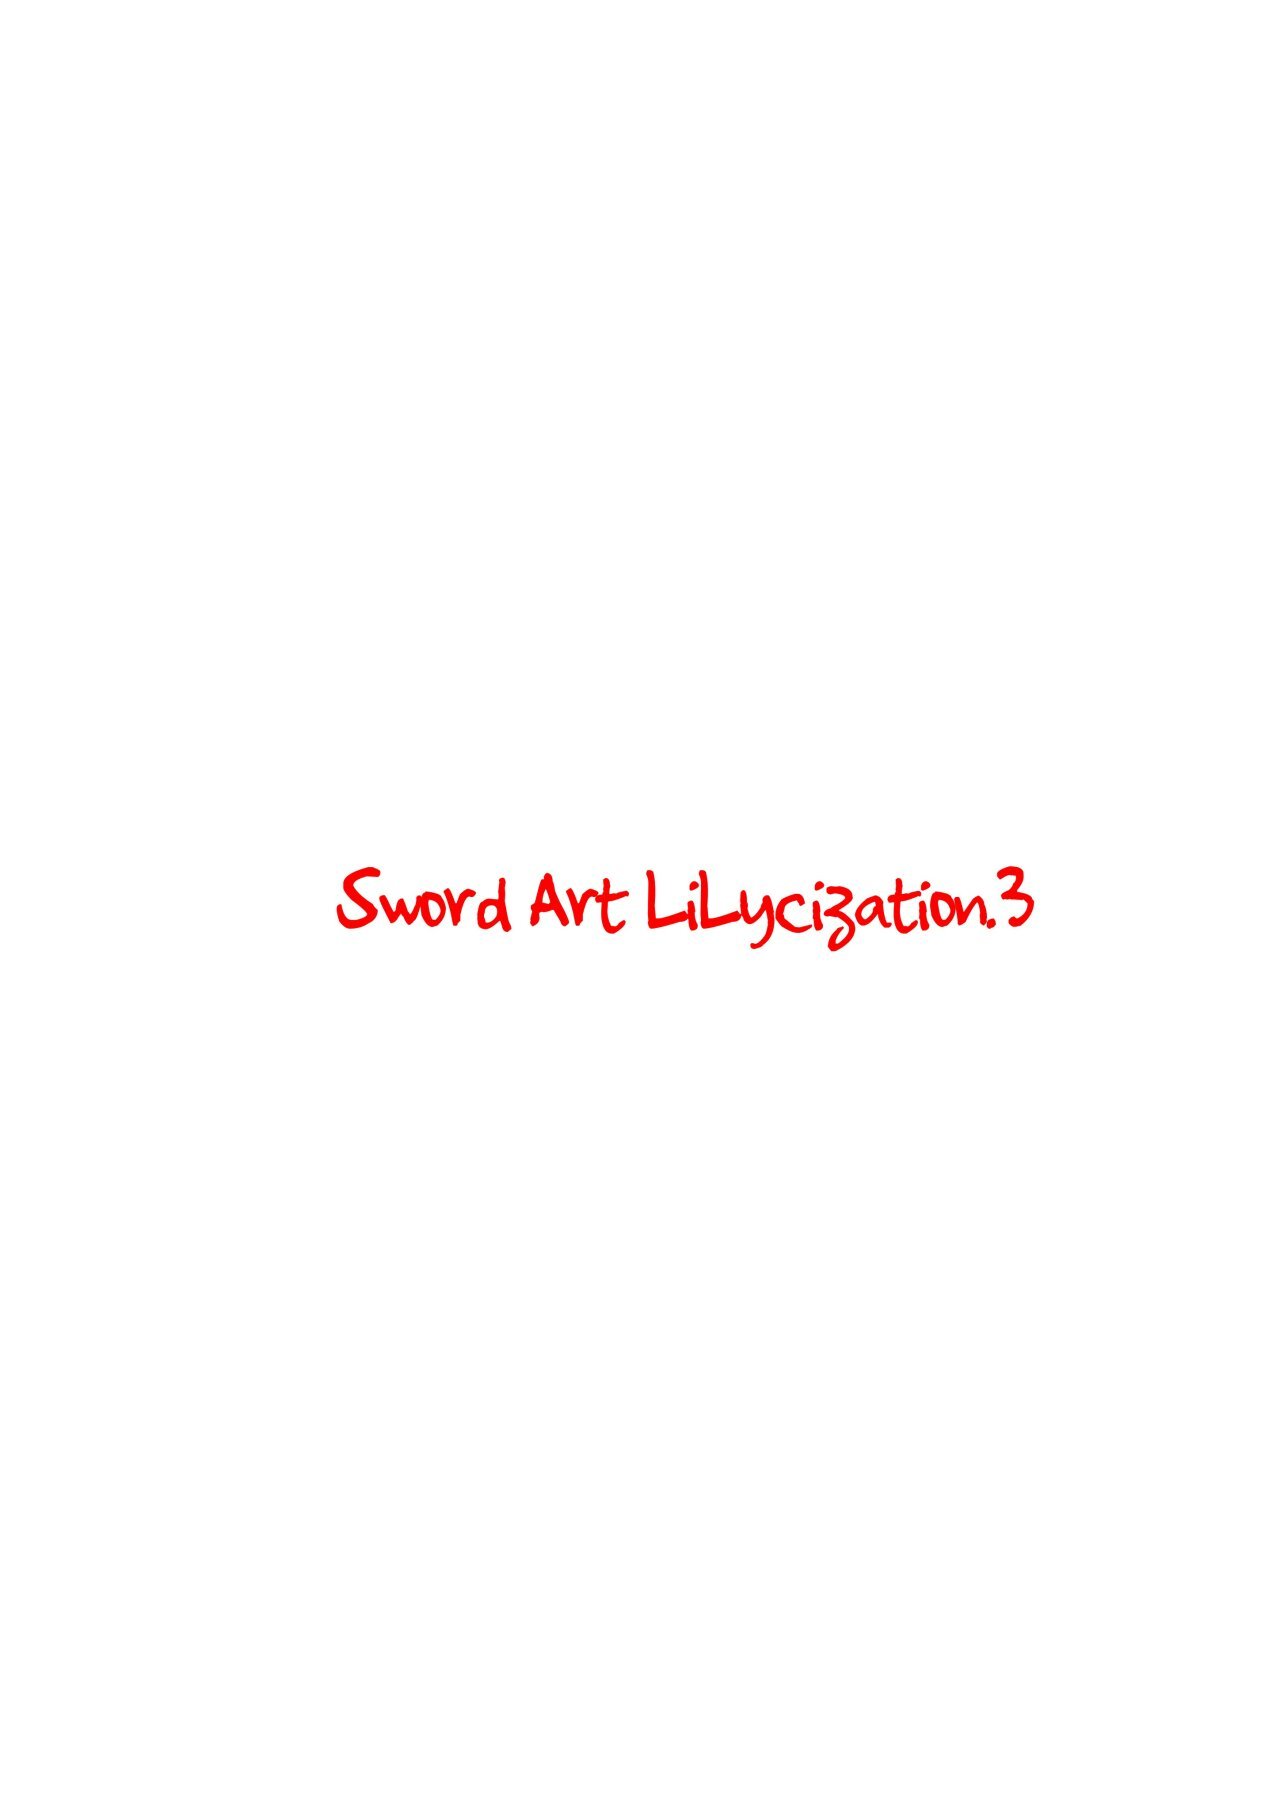 Sword Art Lilycization 3 - 1